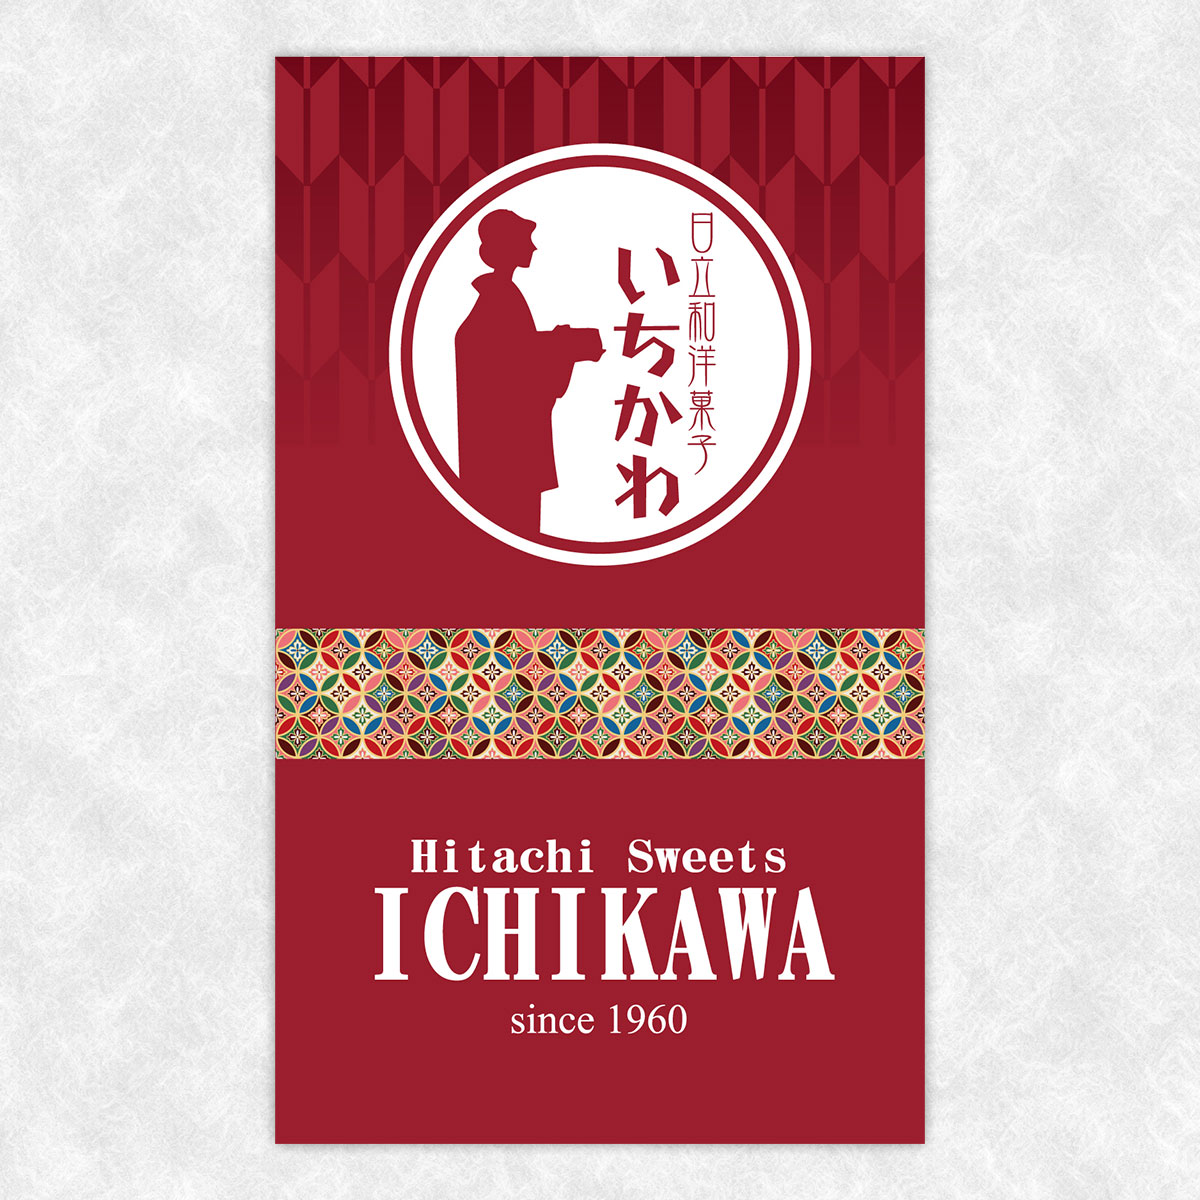 https://crieinc.co.jp/wp-content/uploads/2022/01/ichikawa_logo_01-02-1.jpg